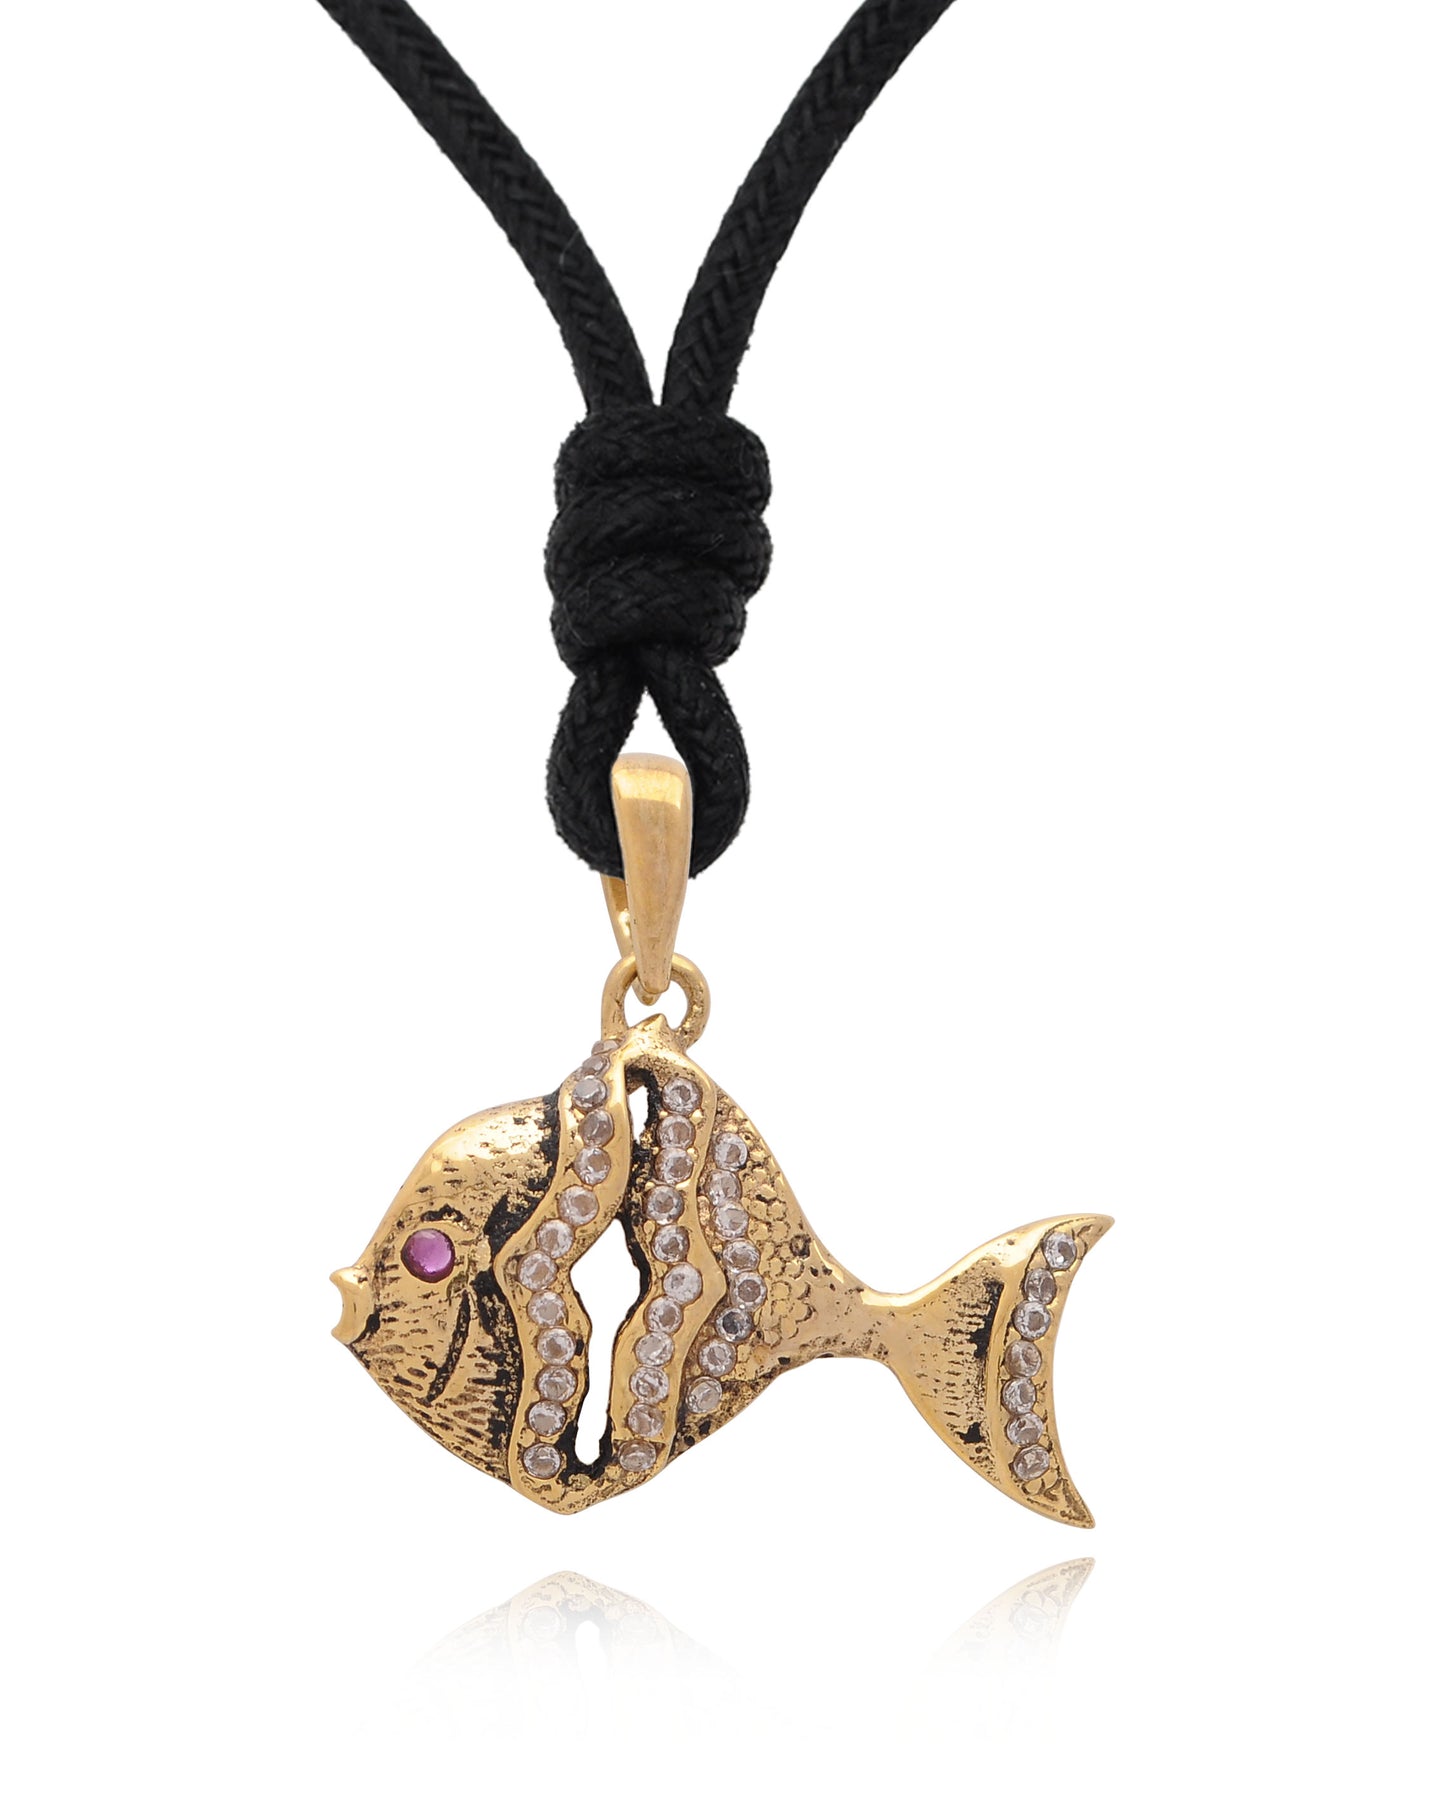 Gold Fish Handmade Brass Charm Necklace Pendant Jewelry